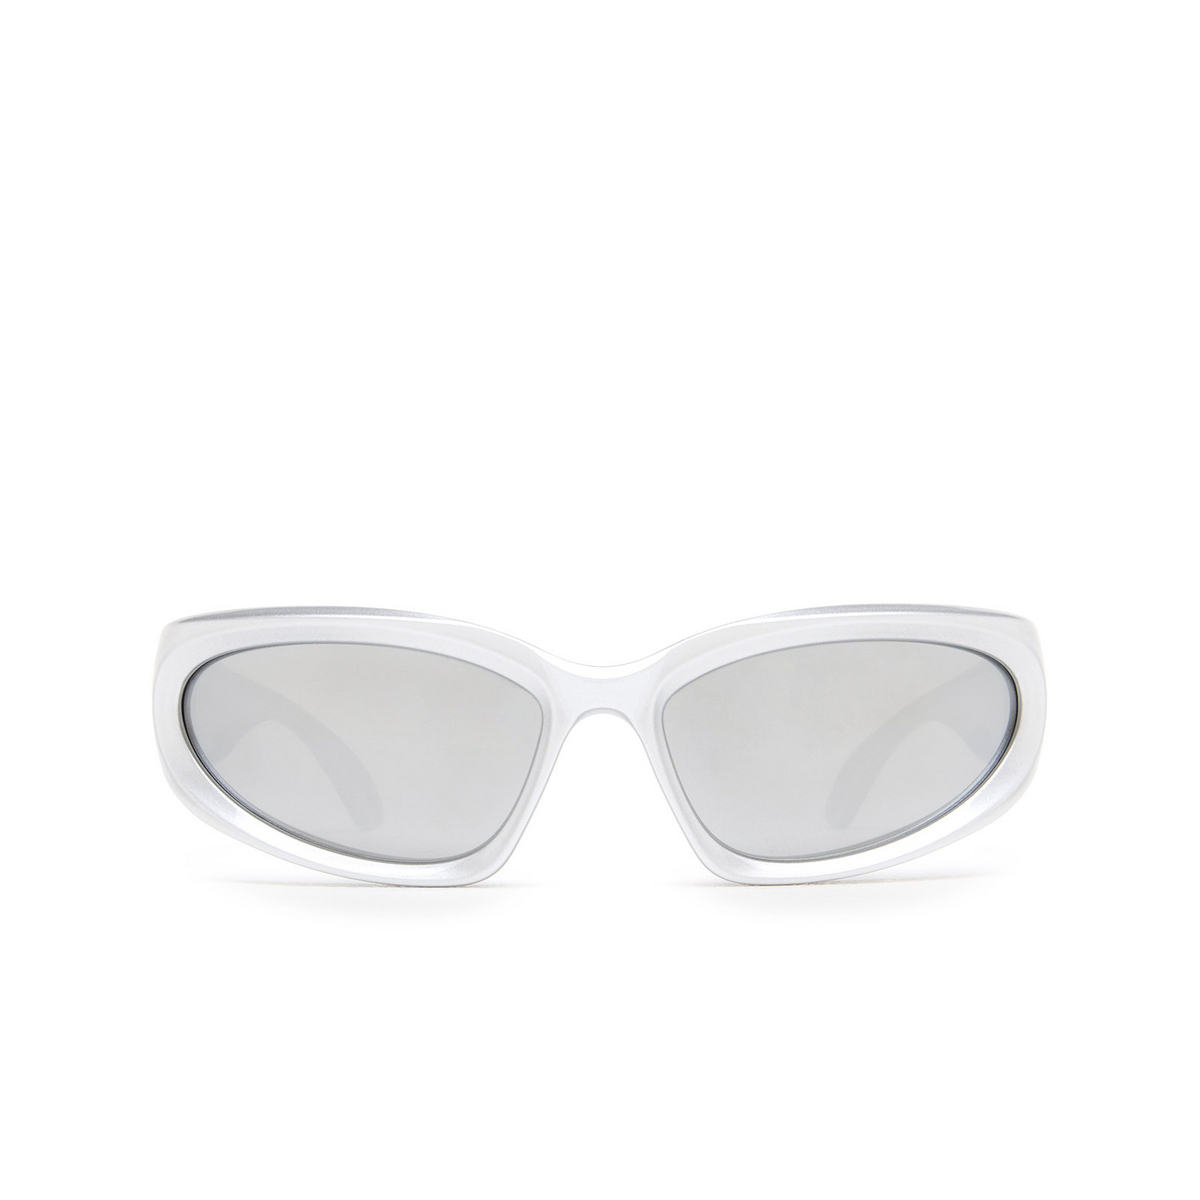 Balenciaga Swift Oval Sunglasses 004 Silver - front view